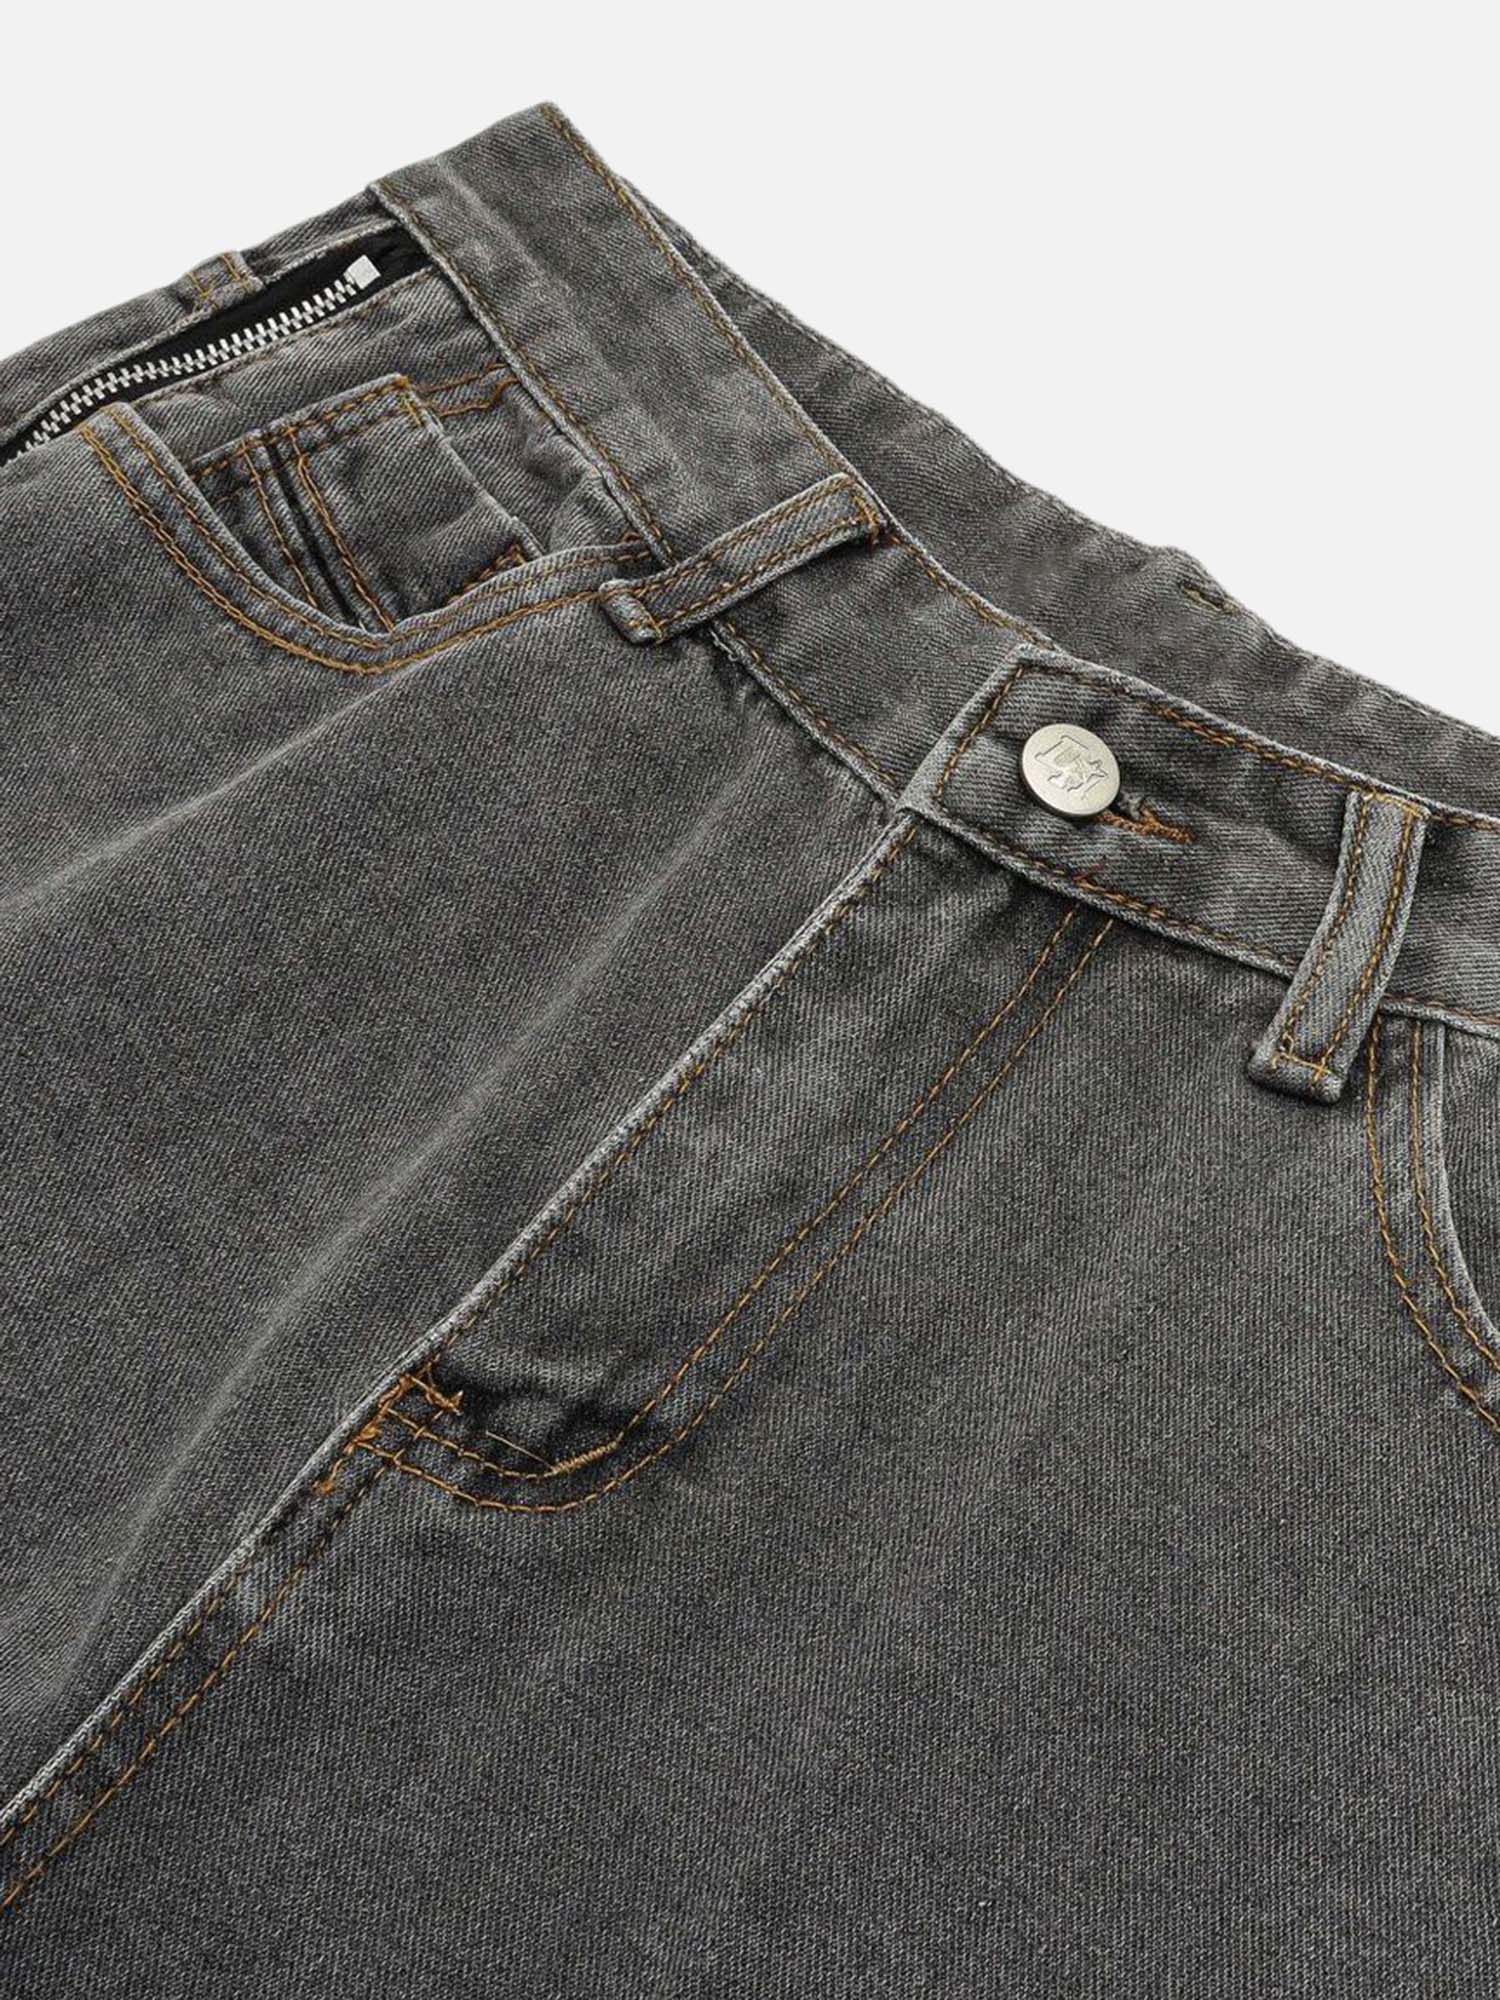 American Street Side Double Zipper Design Denim Shorts